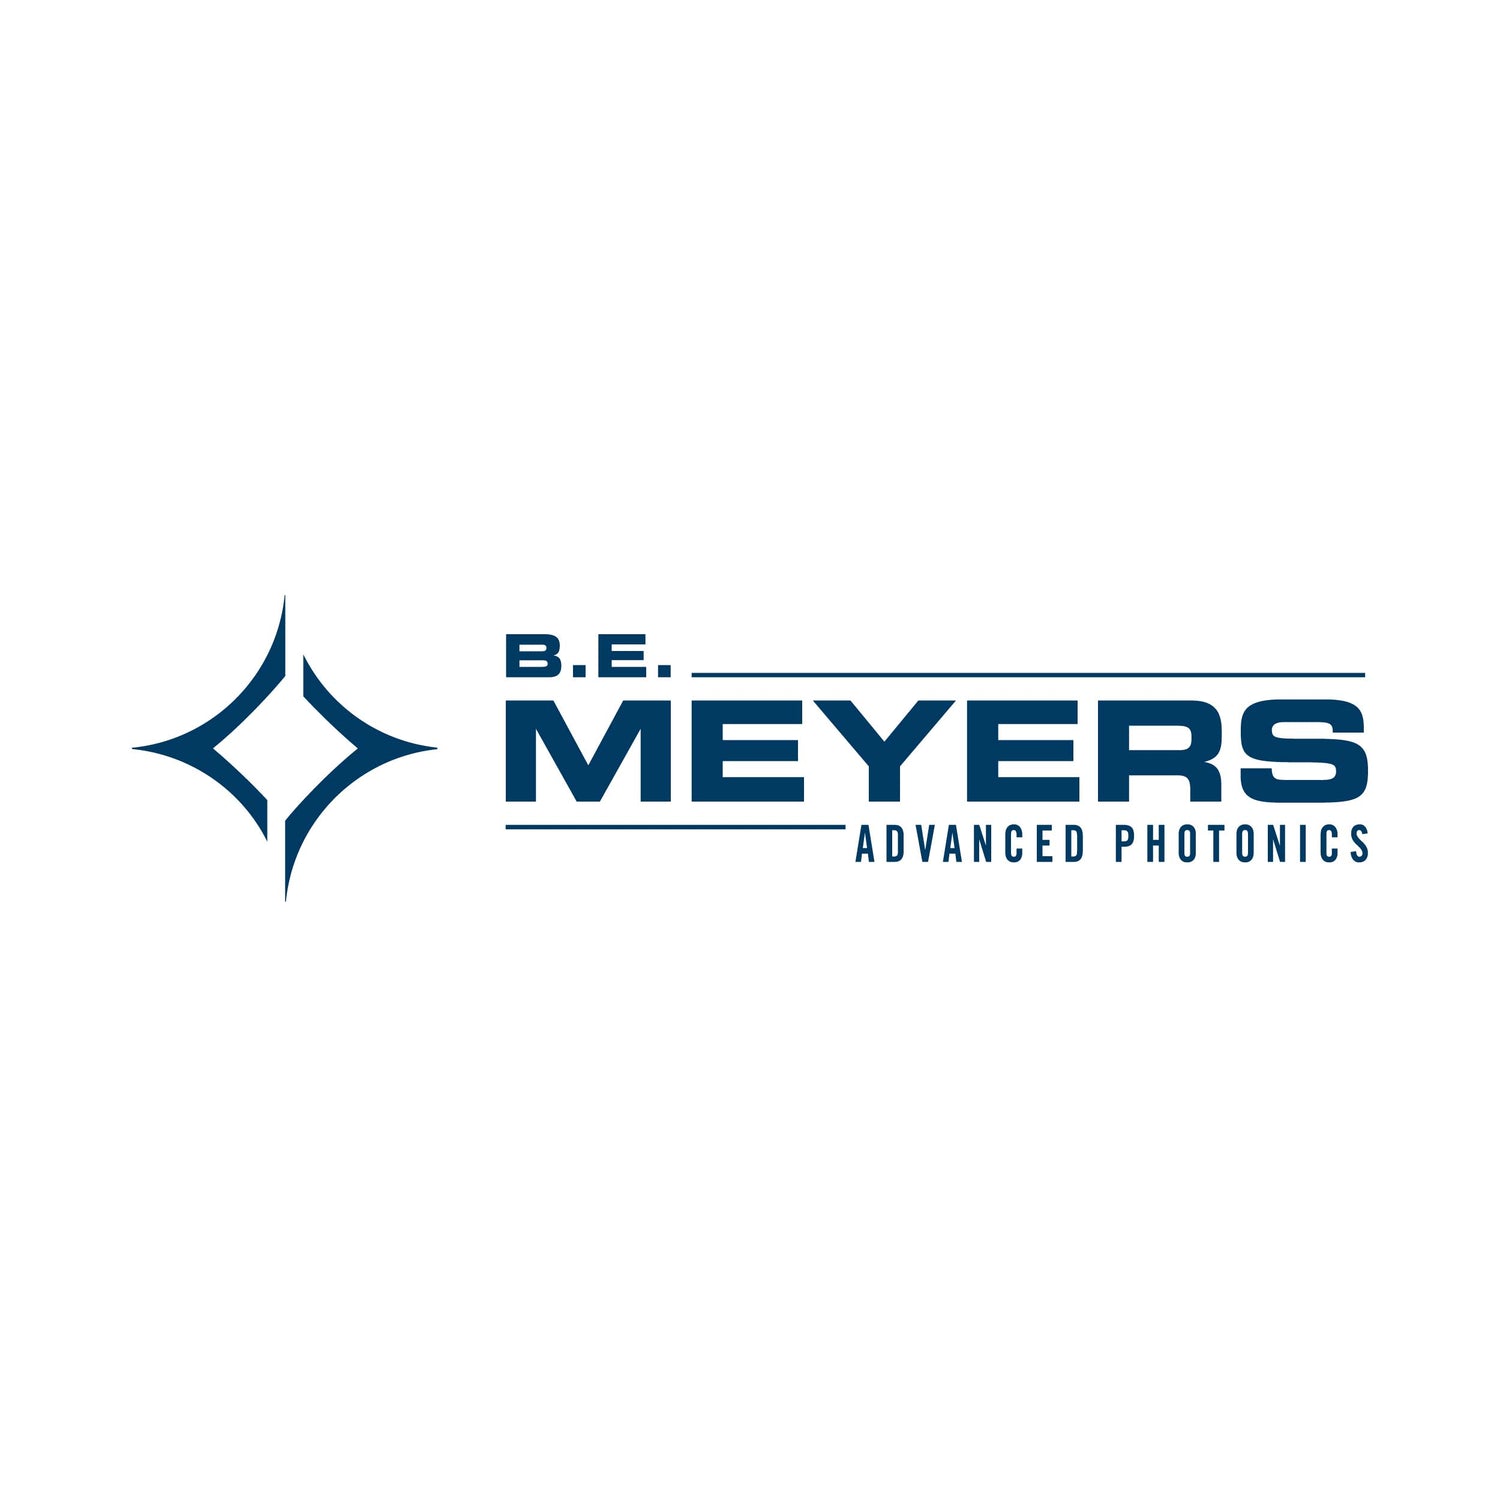 B.E. Meyers Advanced Photonics